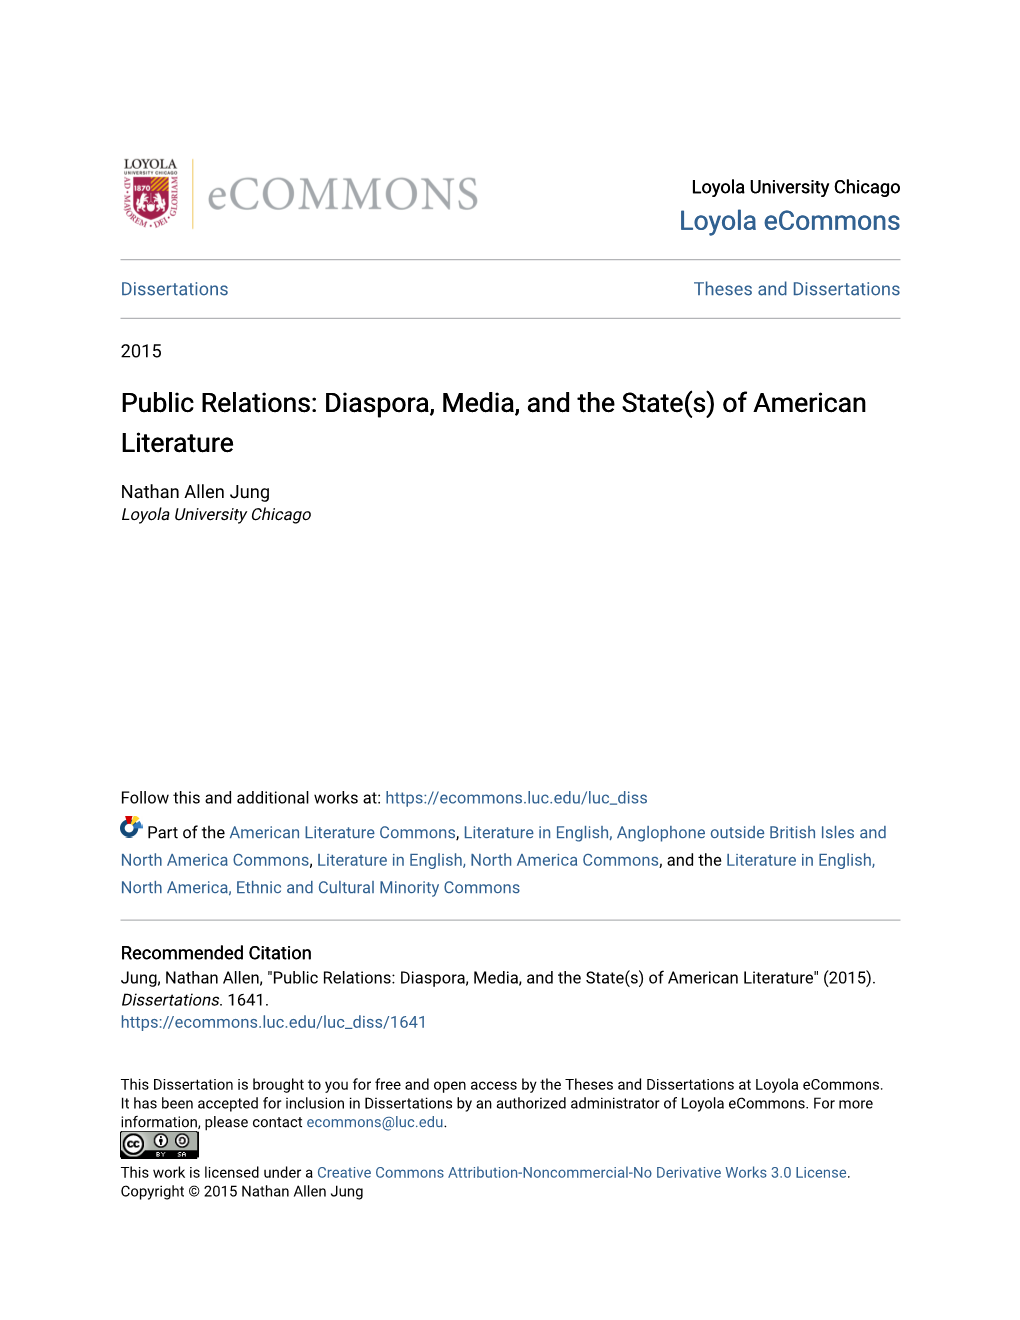 Public Relations: Diaspora, Media, and the State(S) of American Literature